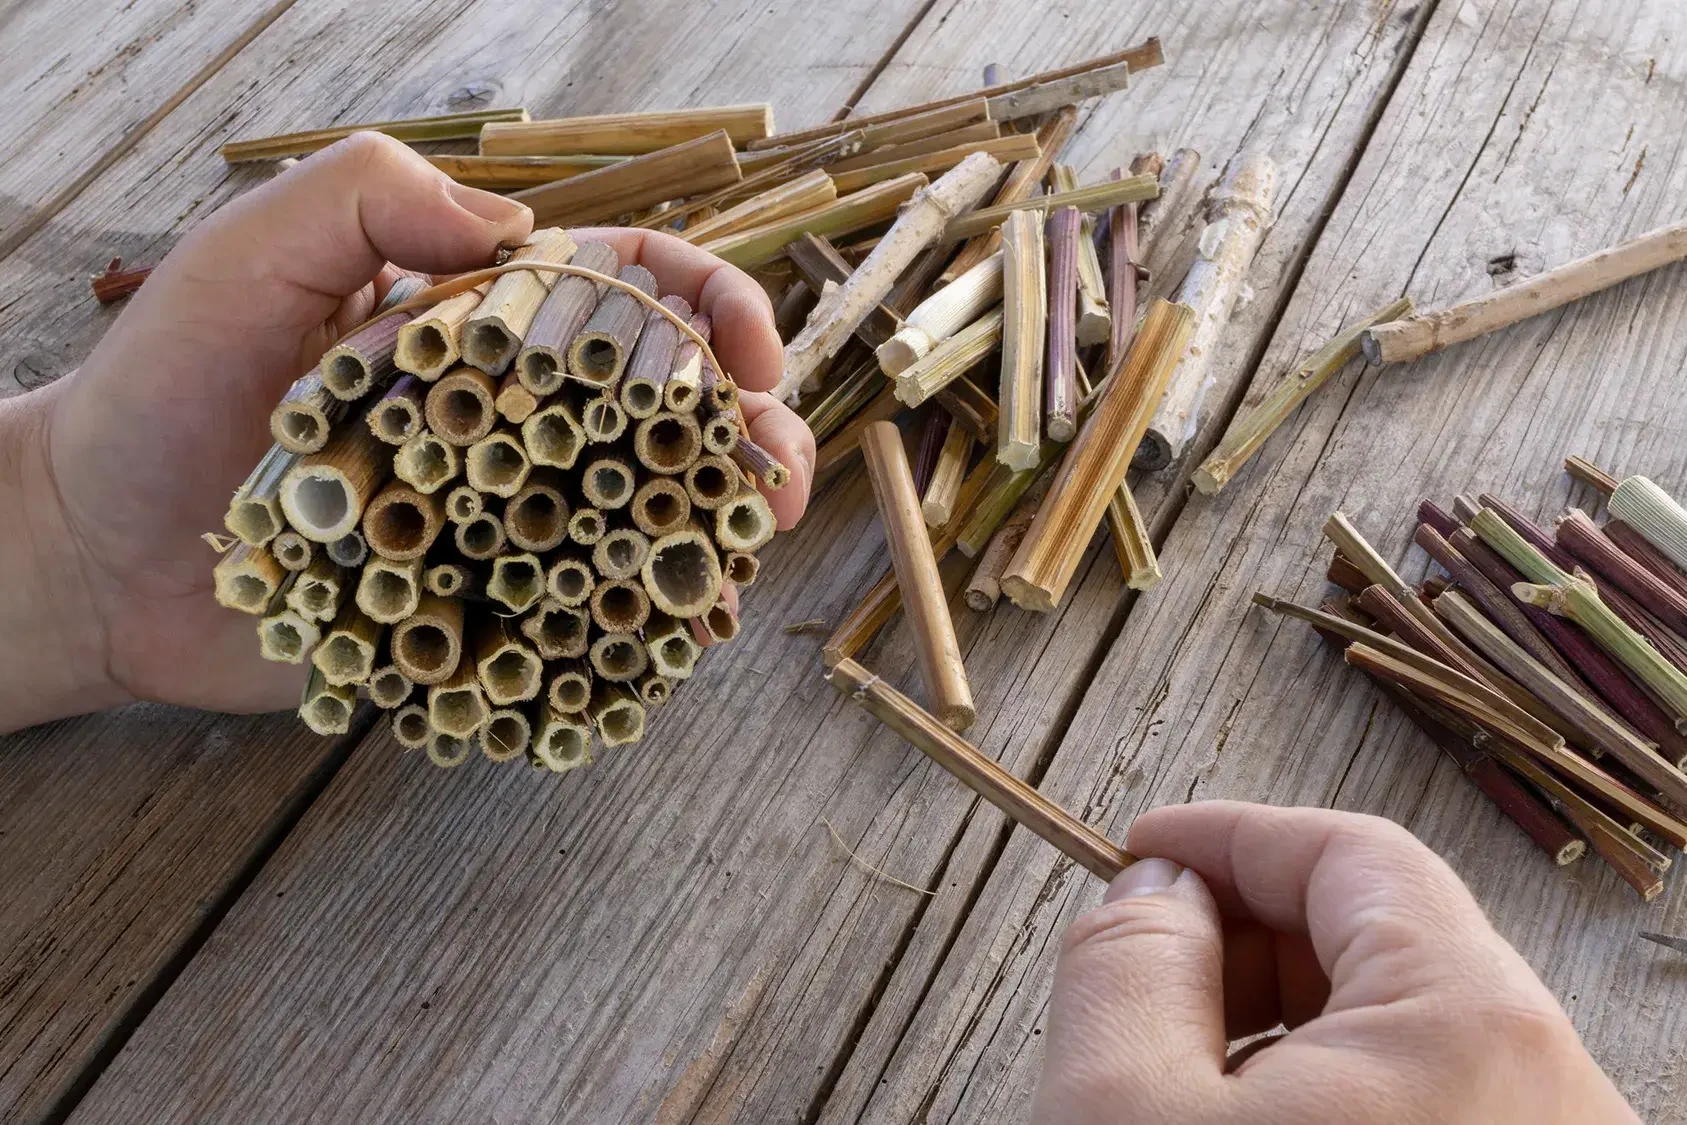 bee habitat workshop crafting with sticks